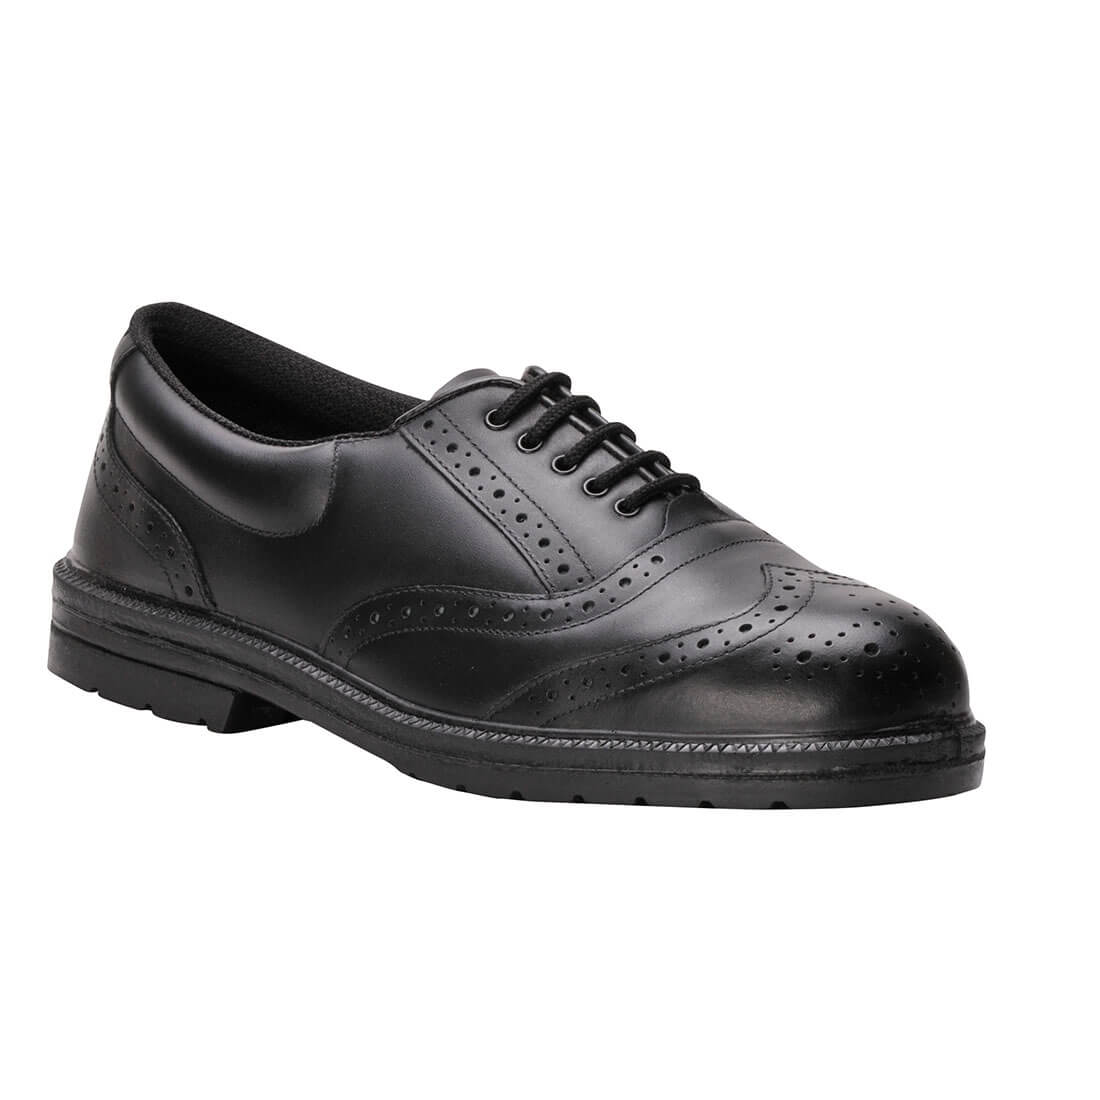 Pantofi Steelite™ Executive Brogue S1P - Incaltaminte de protectie | Bocanci, Pantofi, Sandale, Cizme